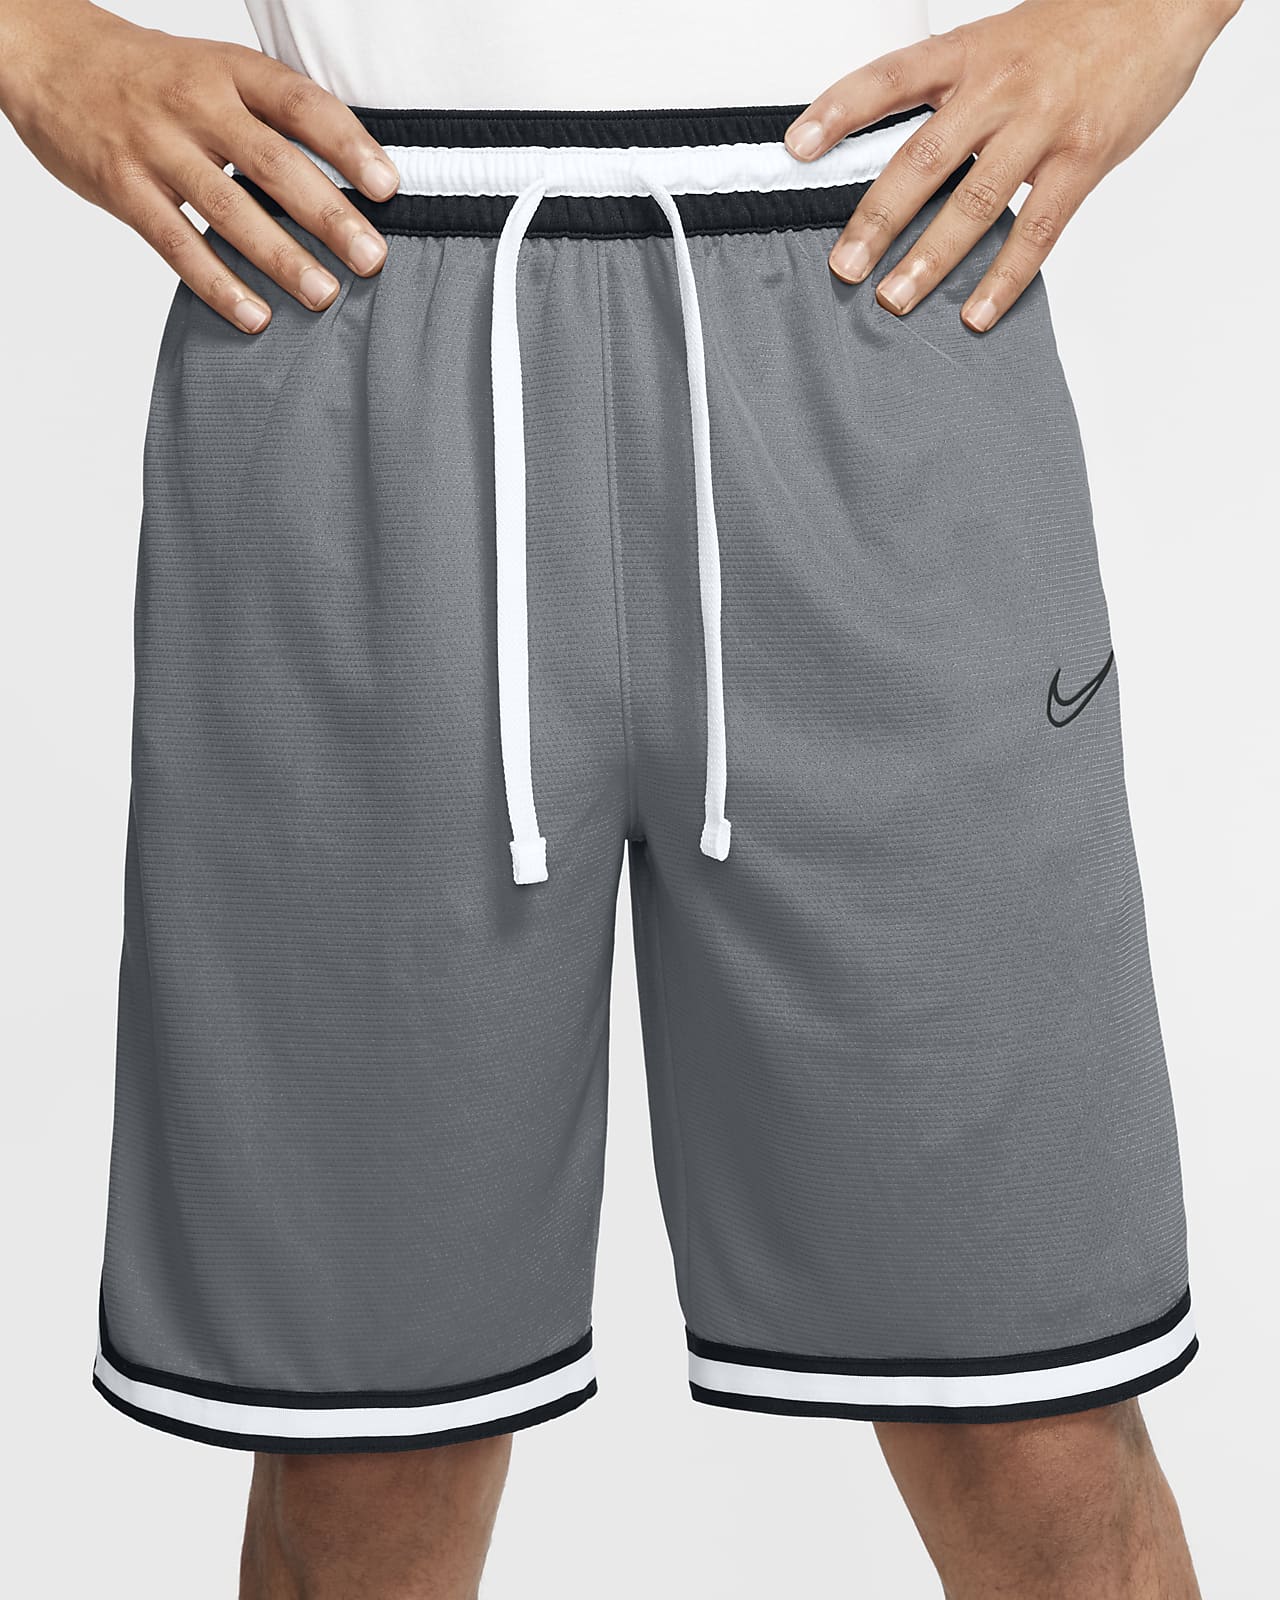 nike basketball shorts with zipper pockets